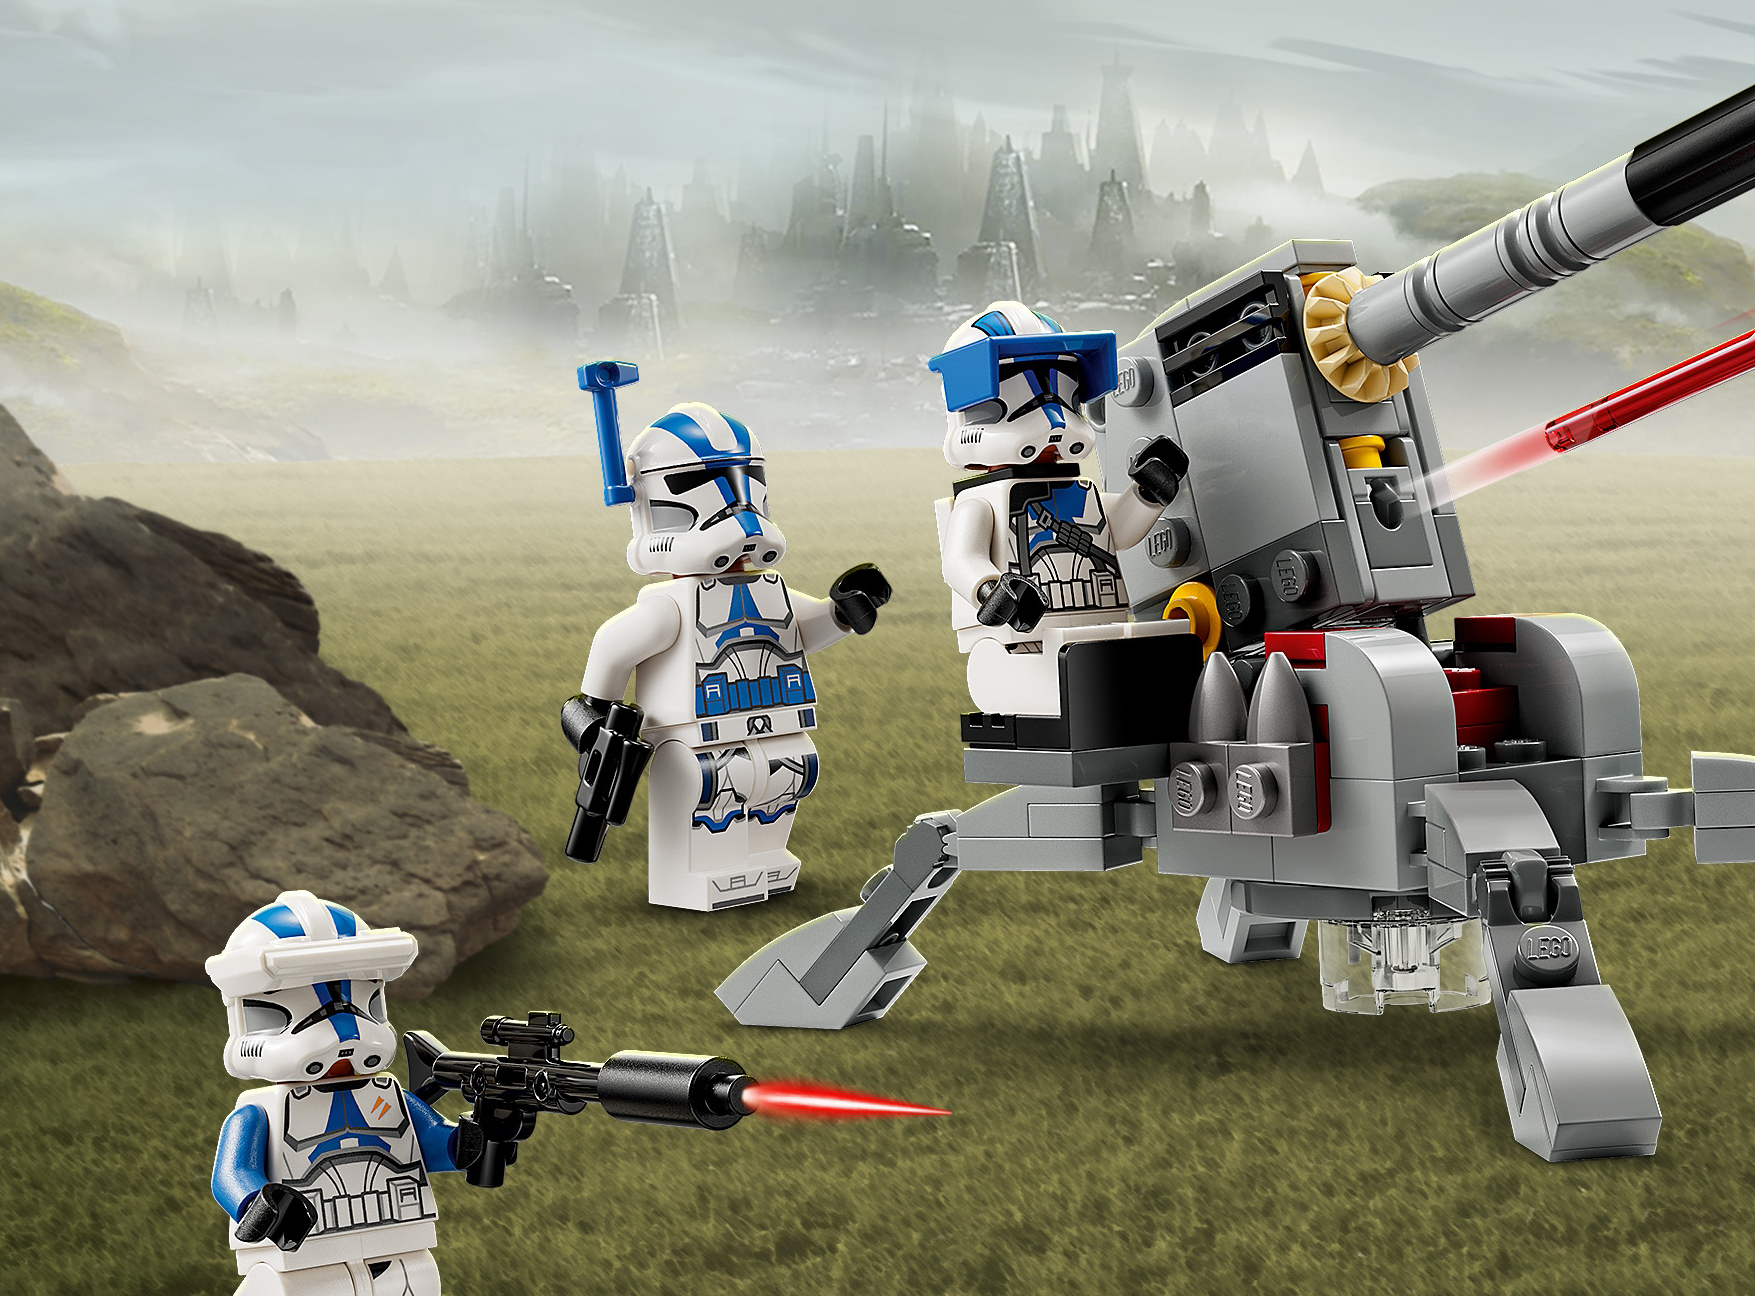 star wars clone troopers in battle drawing